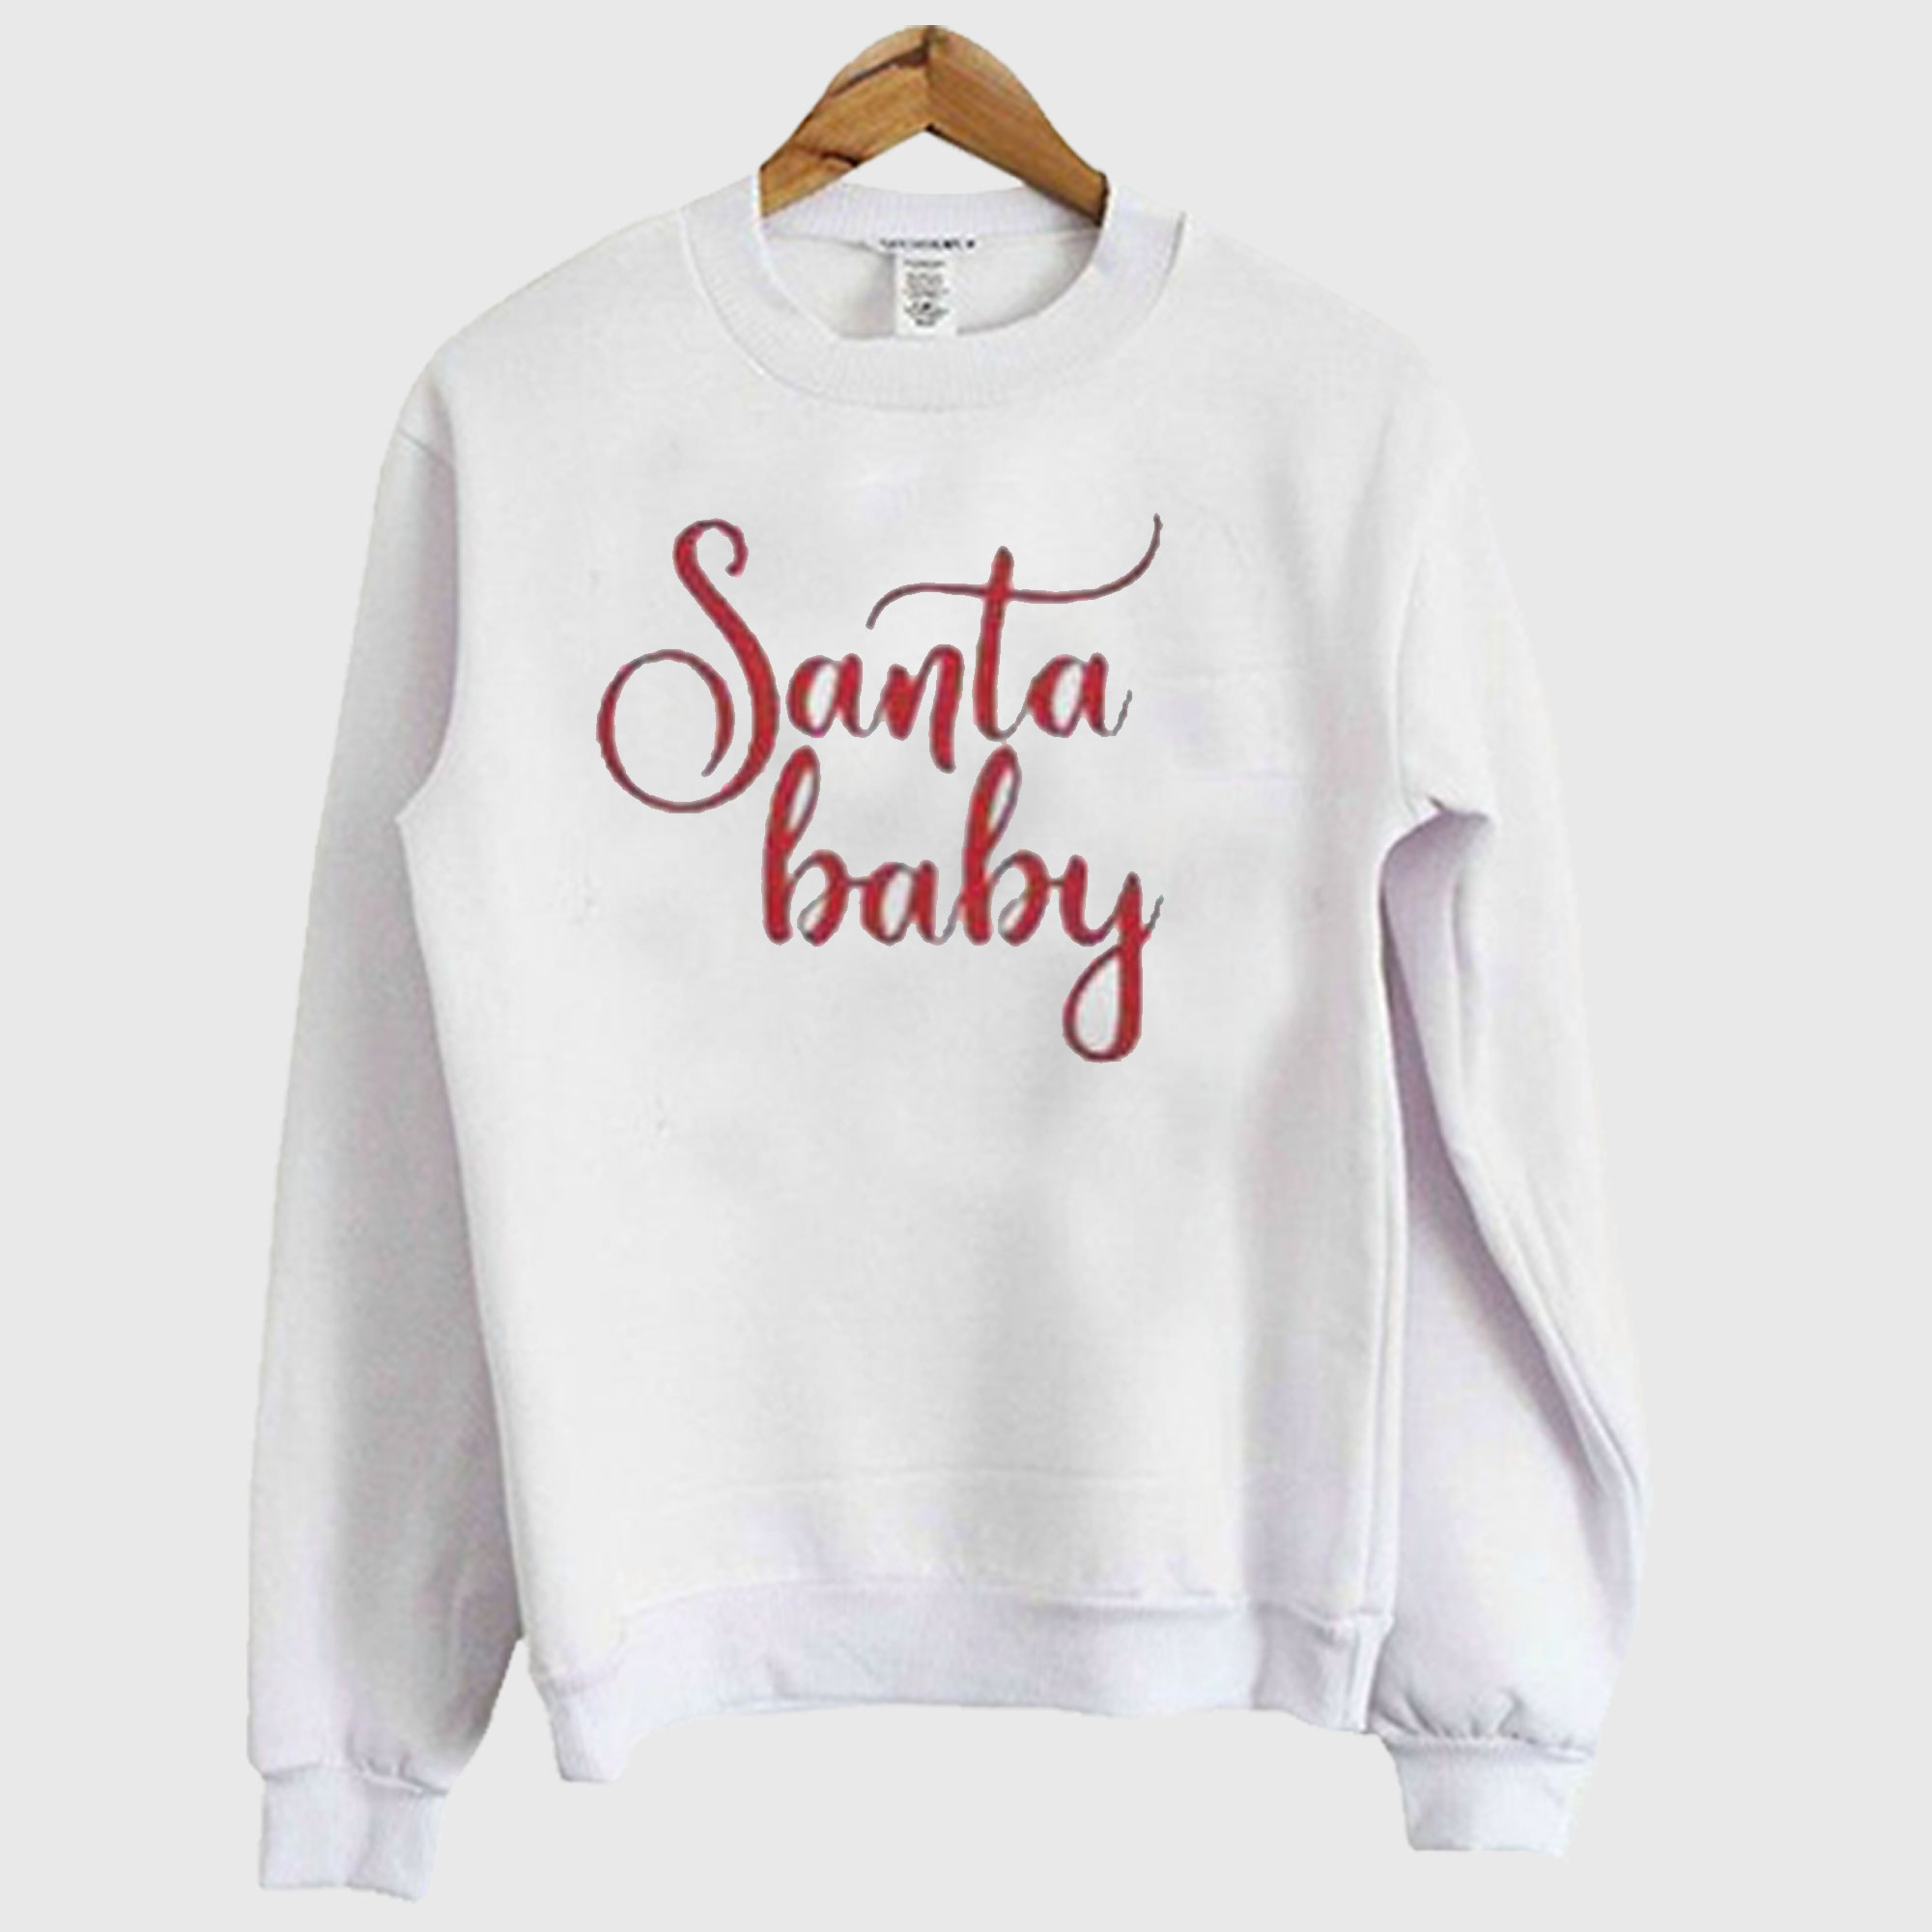 santa baby sweater